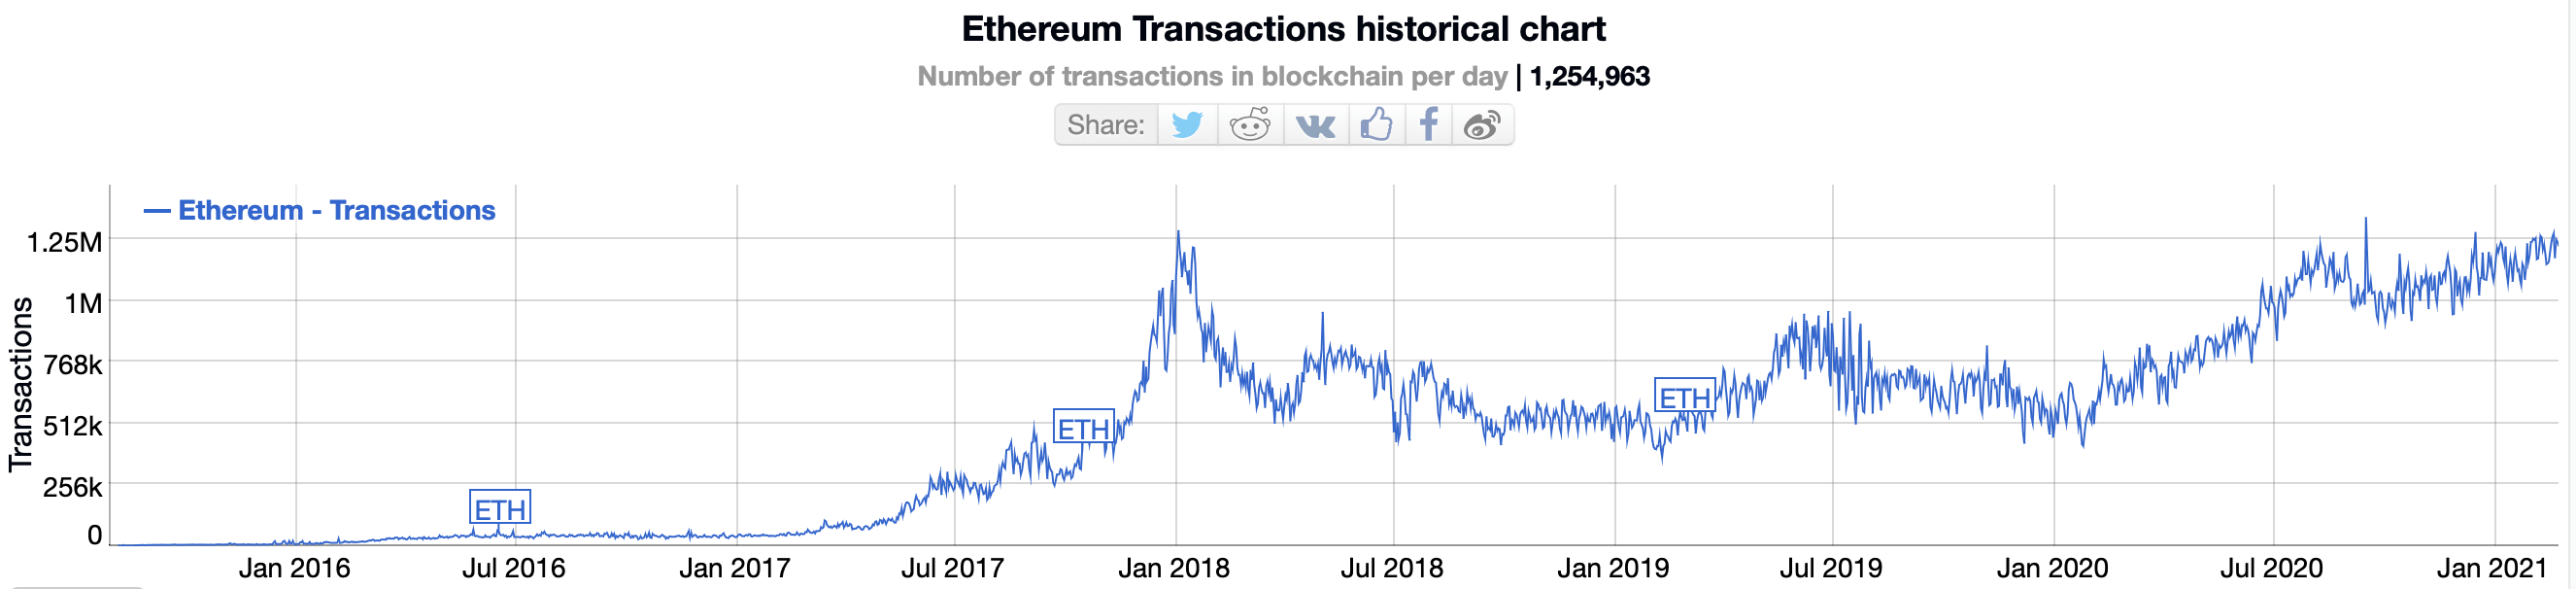 Ethereum Transactions Historical Chart